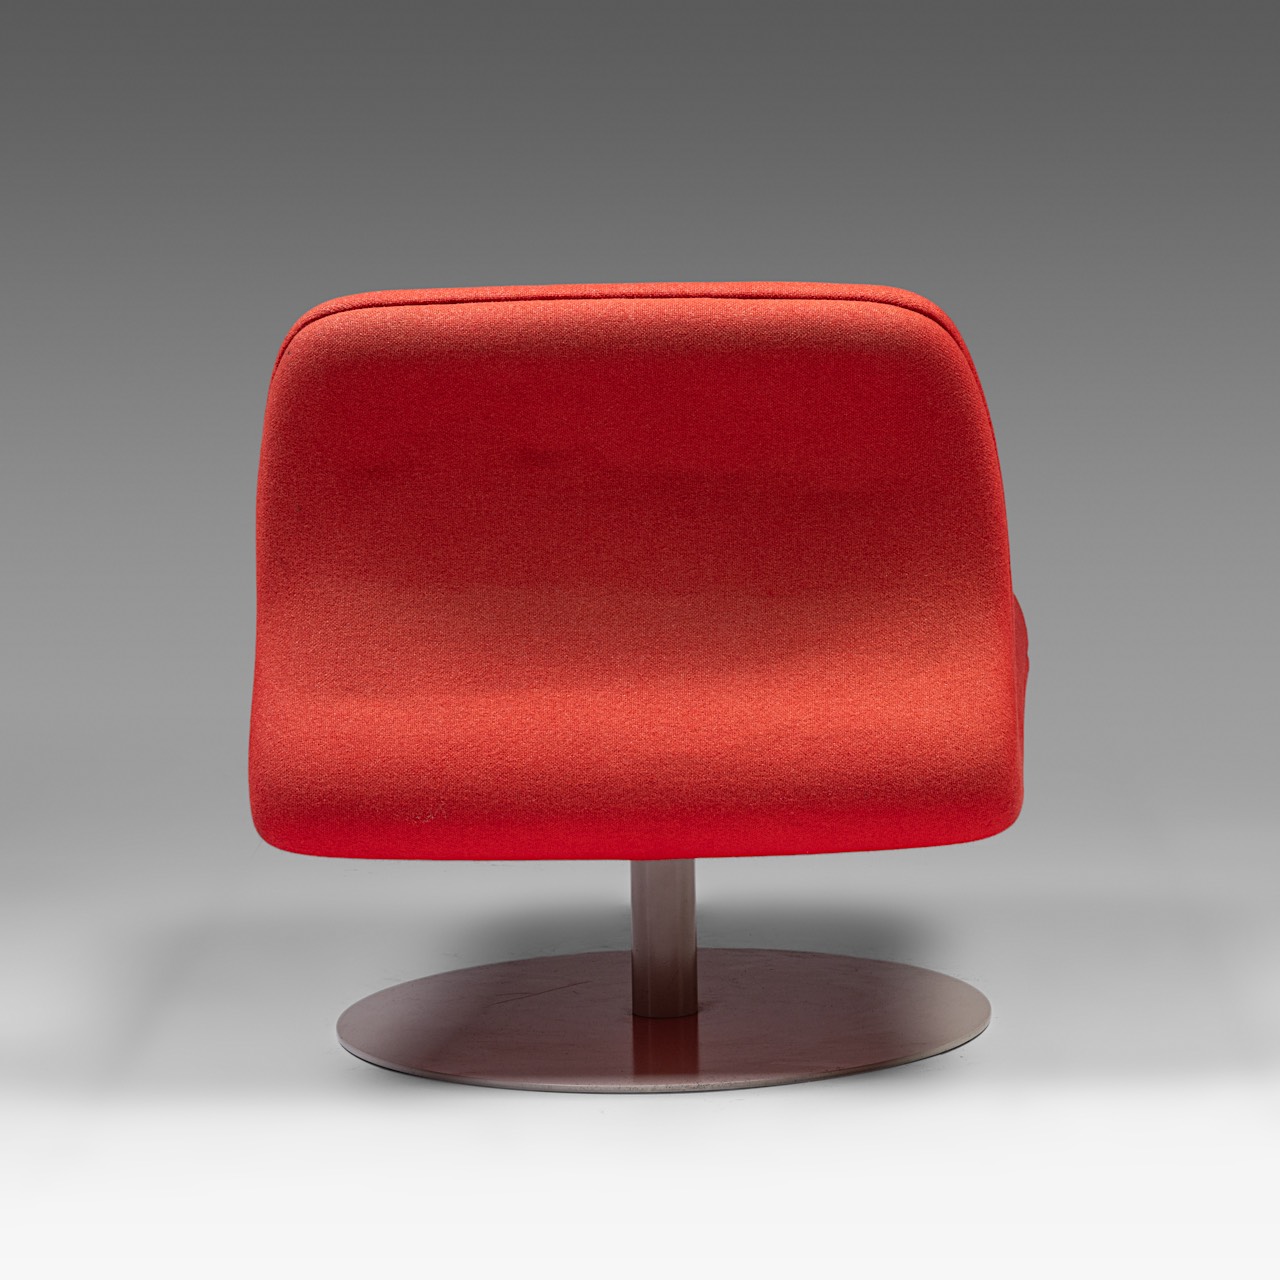 An 'Attitude' chair by Morten Voss for Fritz Hansen, Danmark, 2005, H 70 - W 65 cm - Image 5 of 10